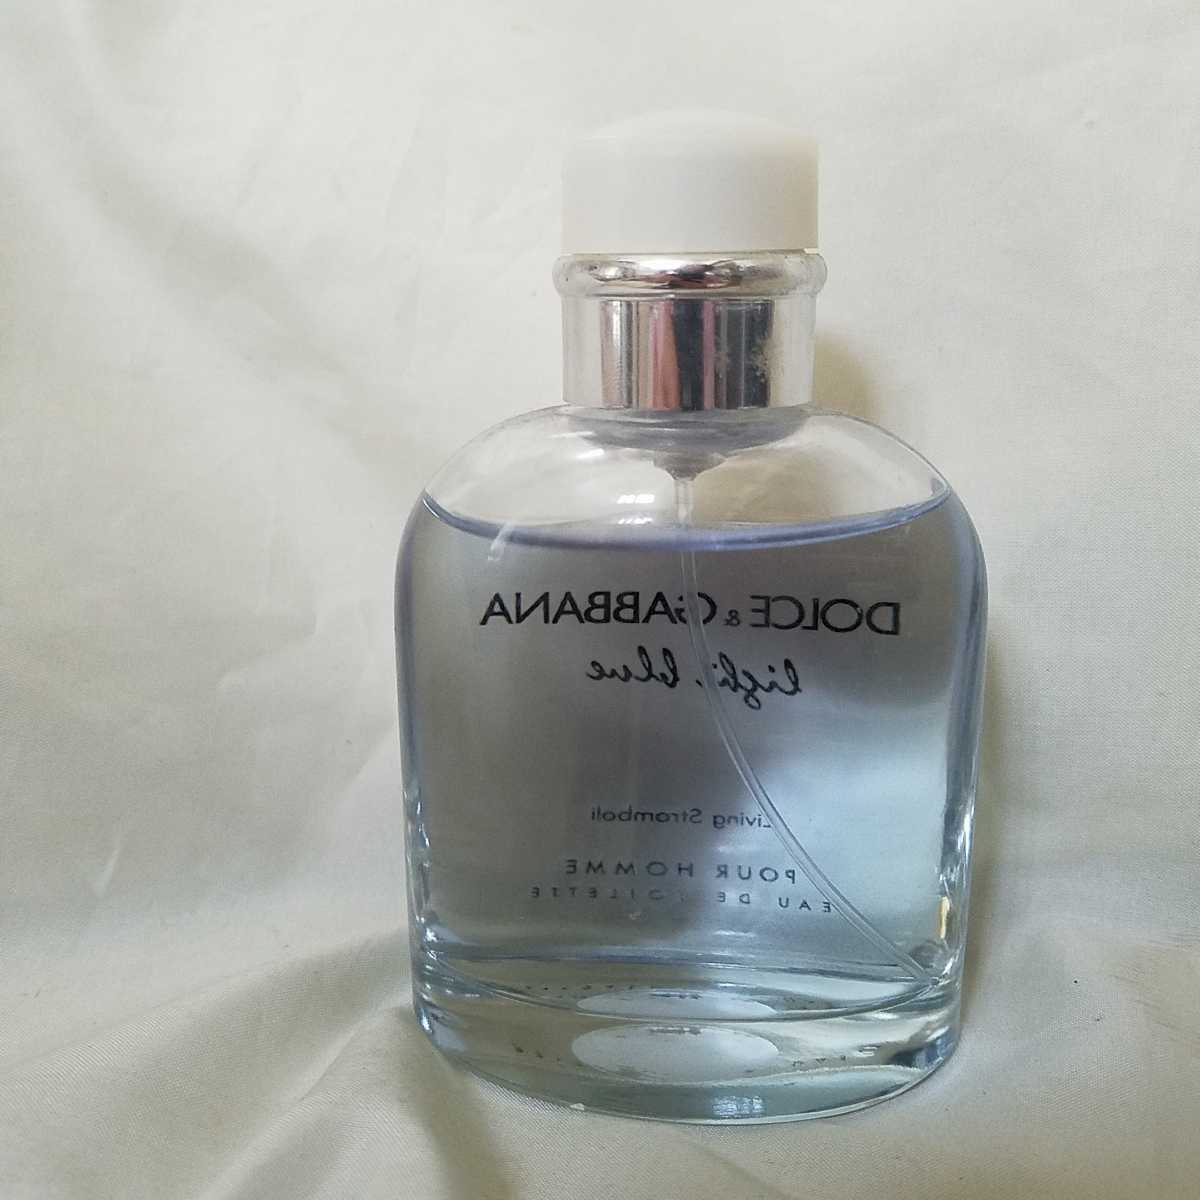  secondhand goods *DOLCE&GABBANA/ light blue li vi n Gusto long boli125ml perfume / hard-to-find 